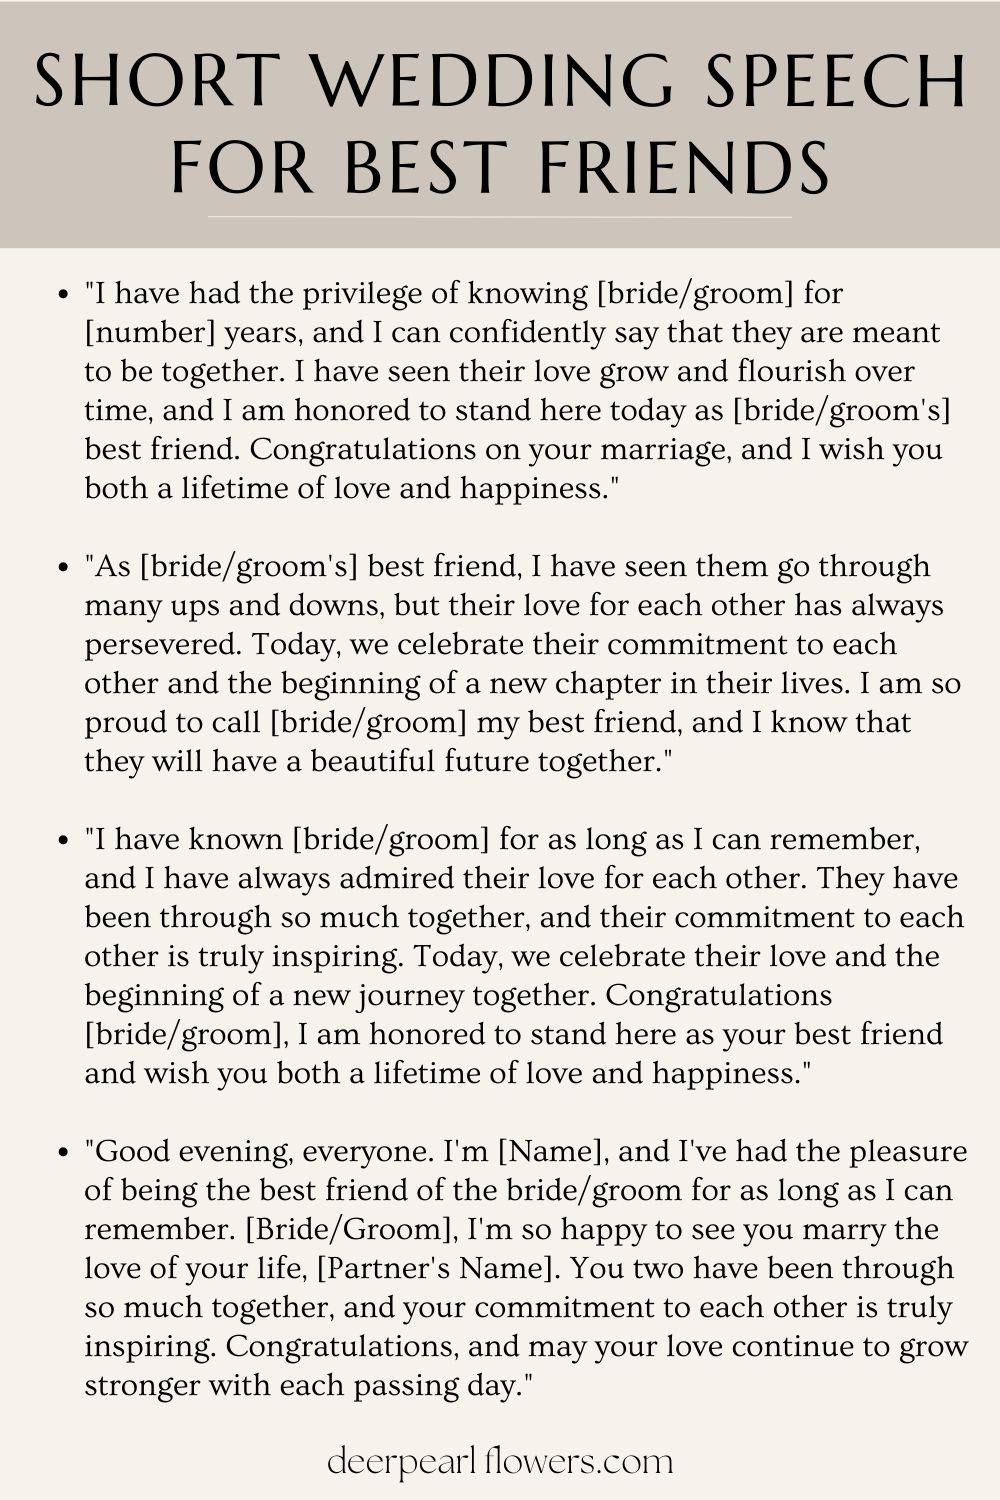 speech on best friend wedding